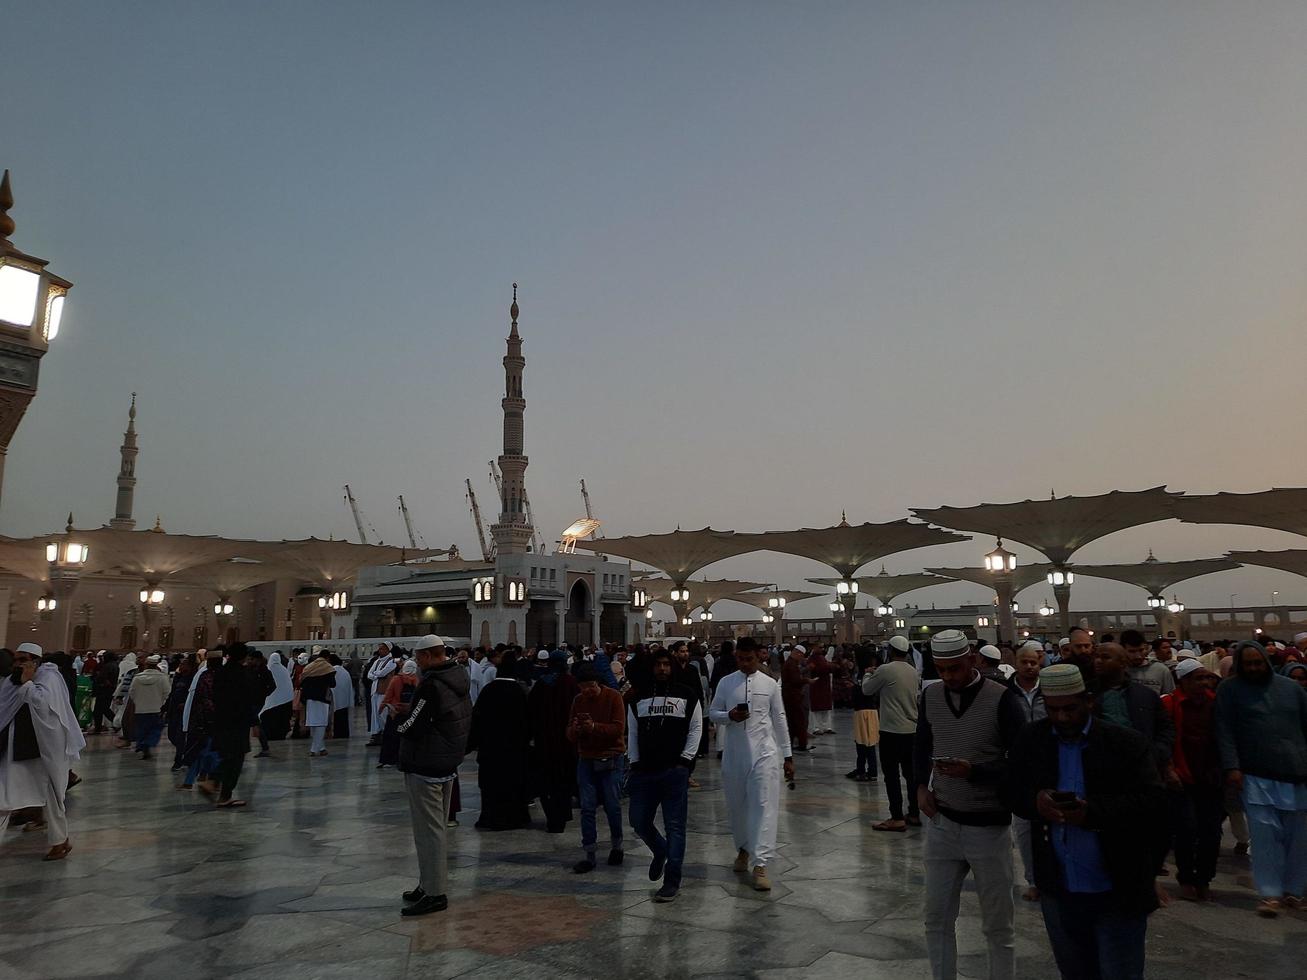 medina, saudi-arabien, dezember 2022 - schöner blick auf den außenhof der masjid al-nabawi, madinah. foto